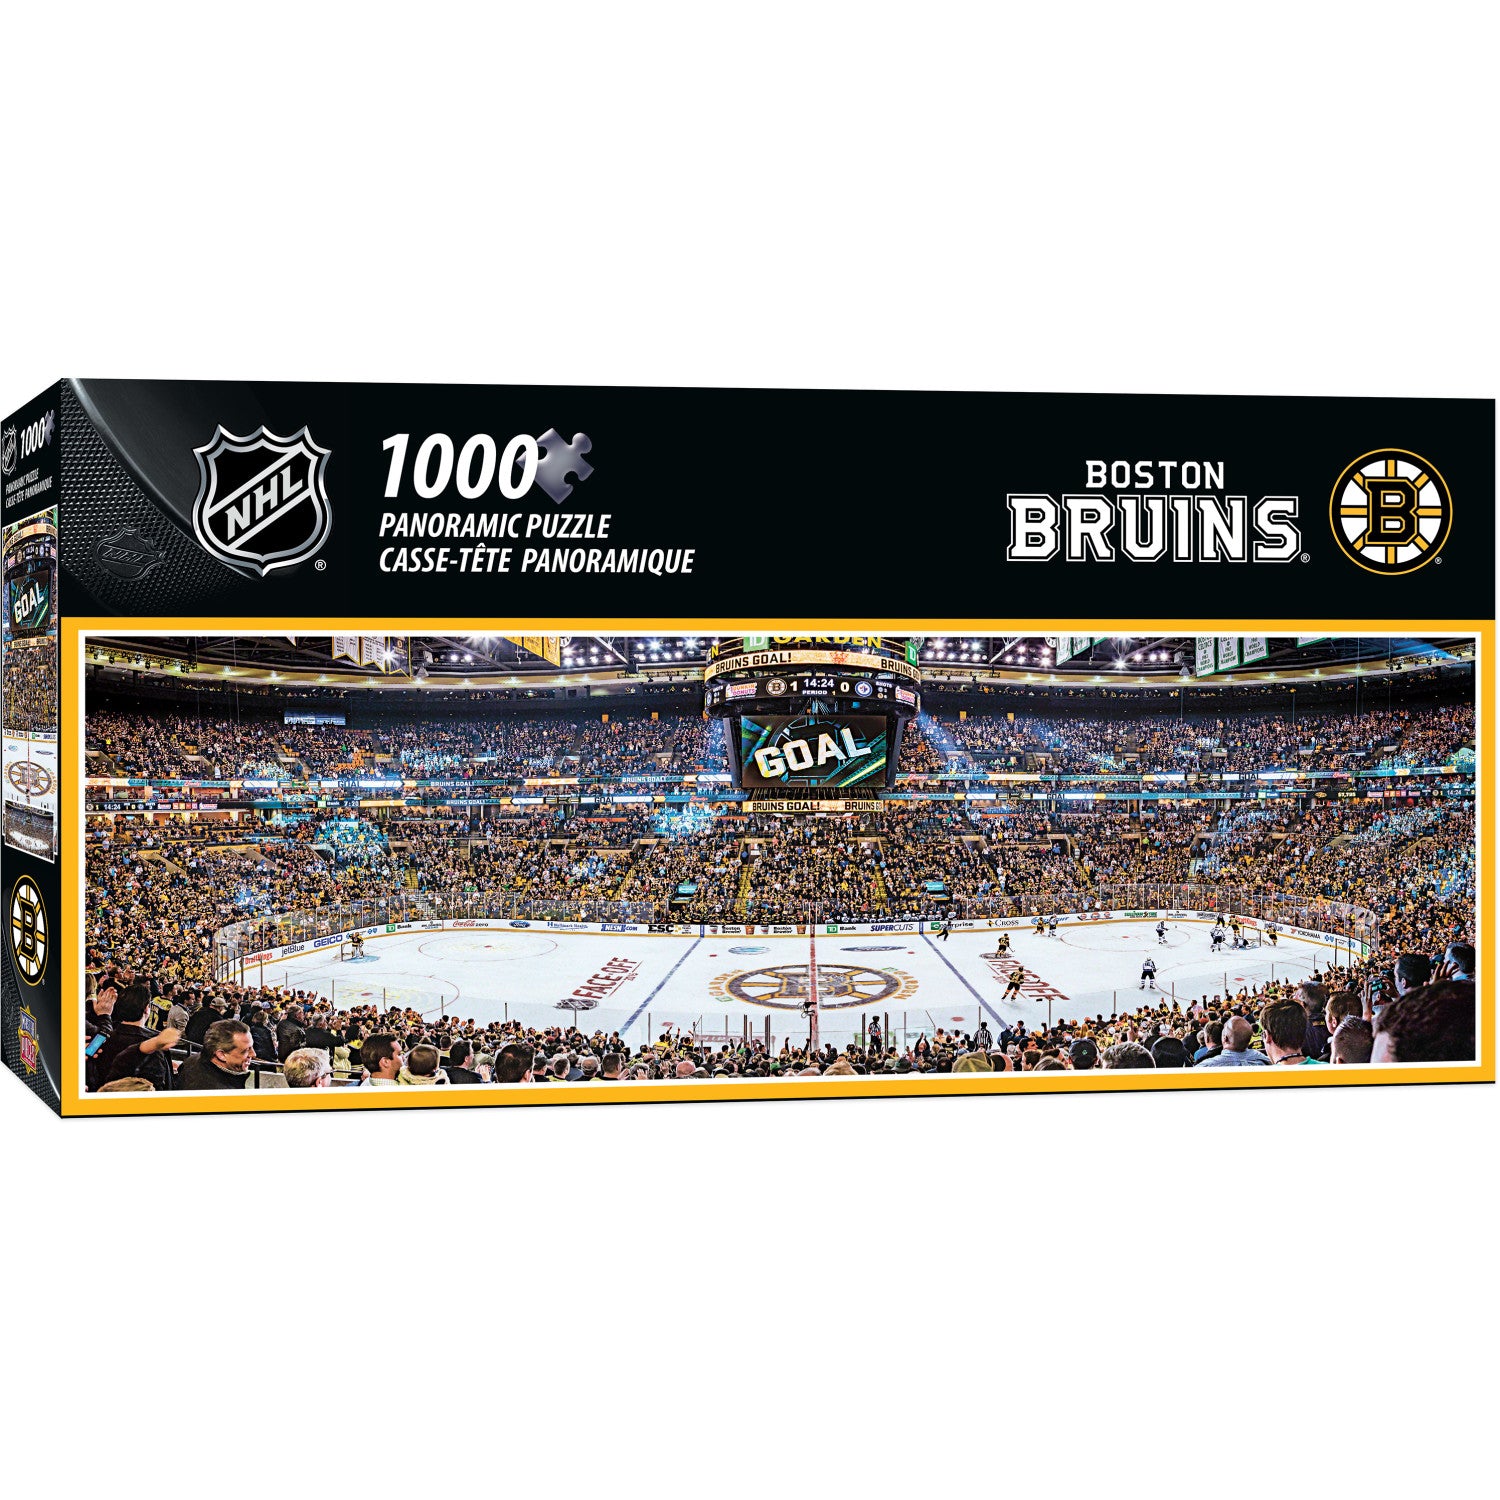 Boston Bruins - 1000 Piece Panoramic Puzzle